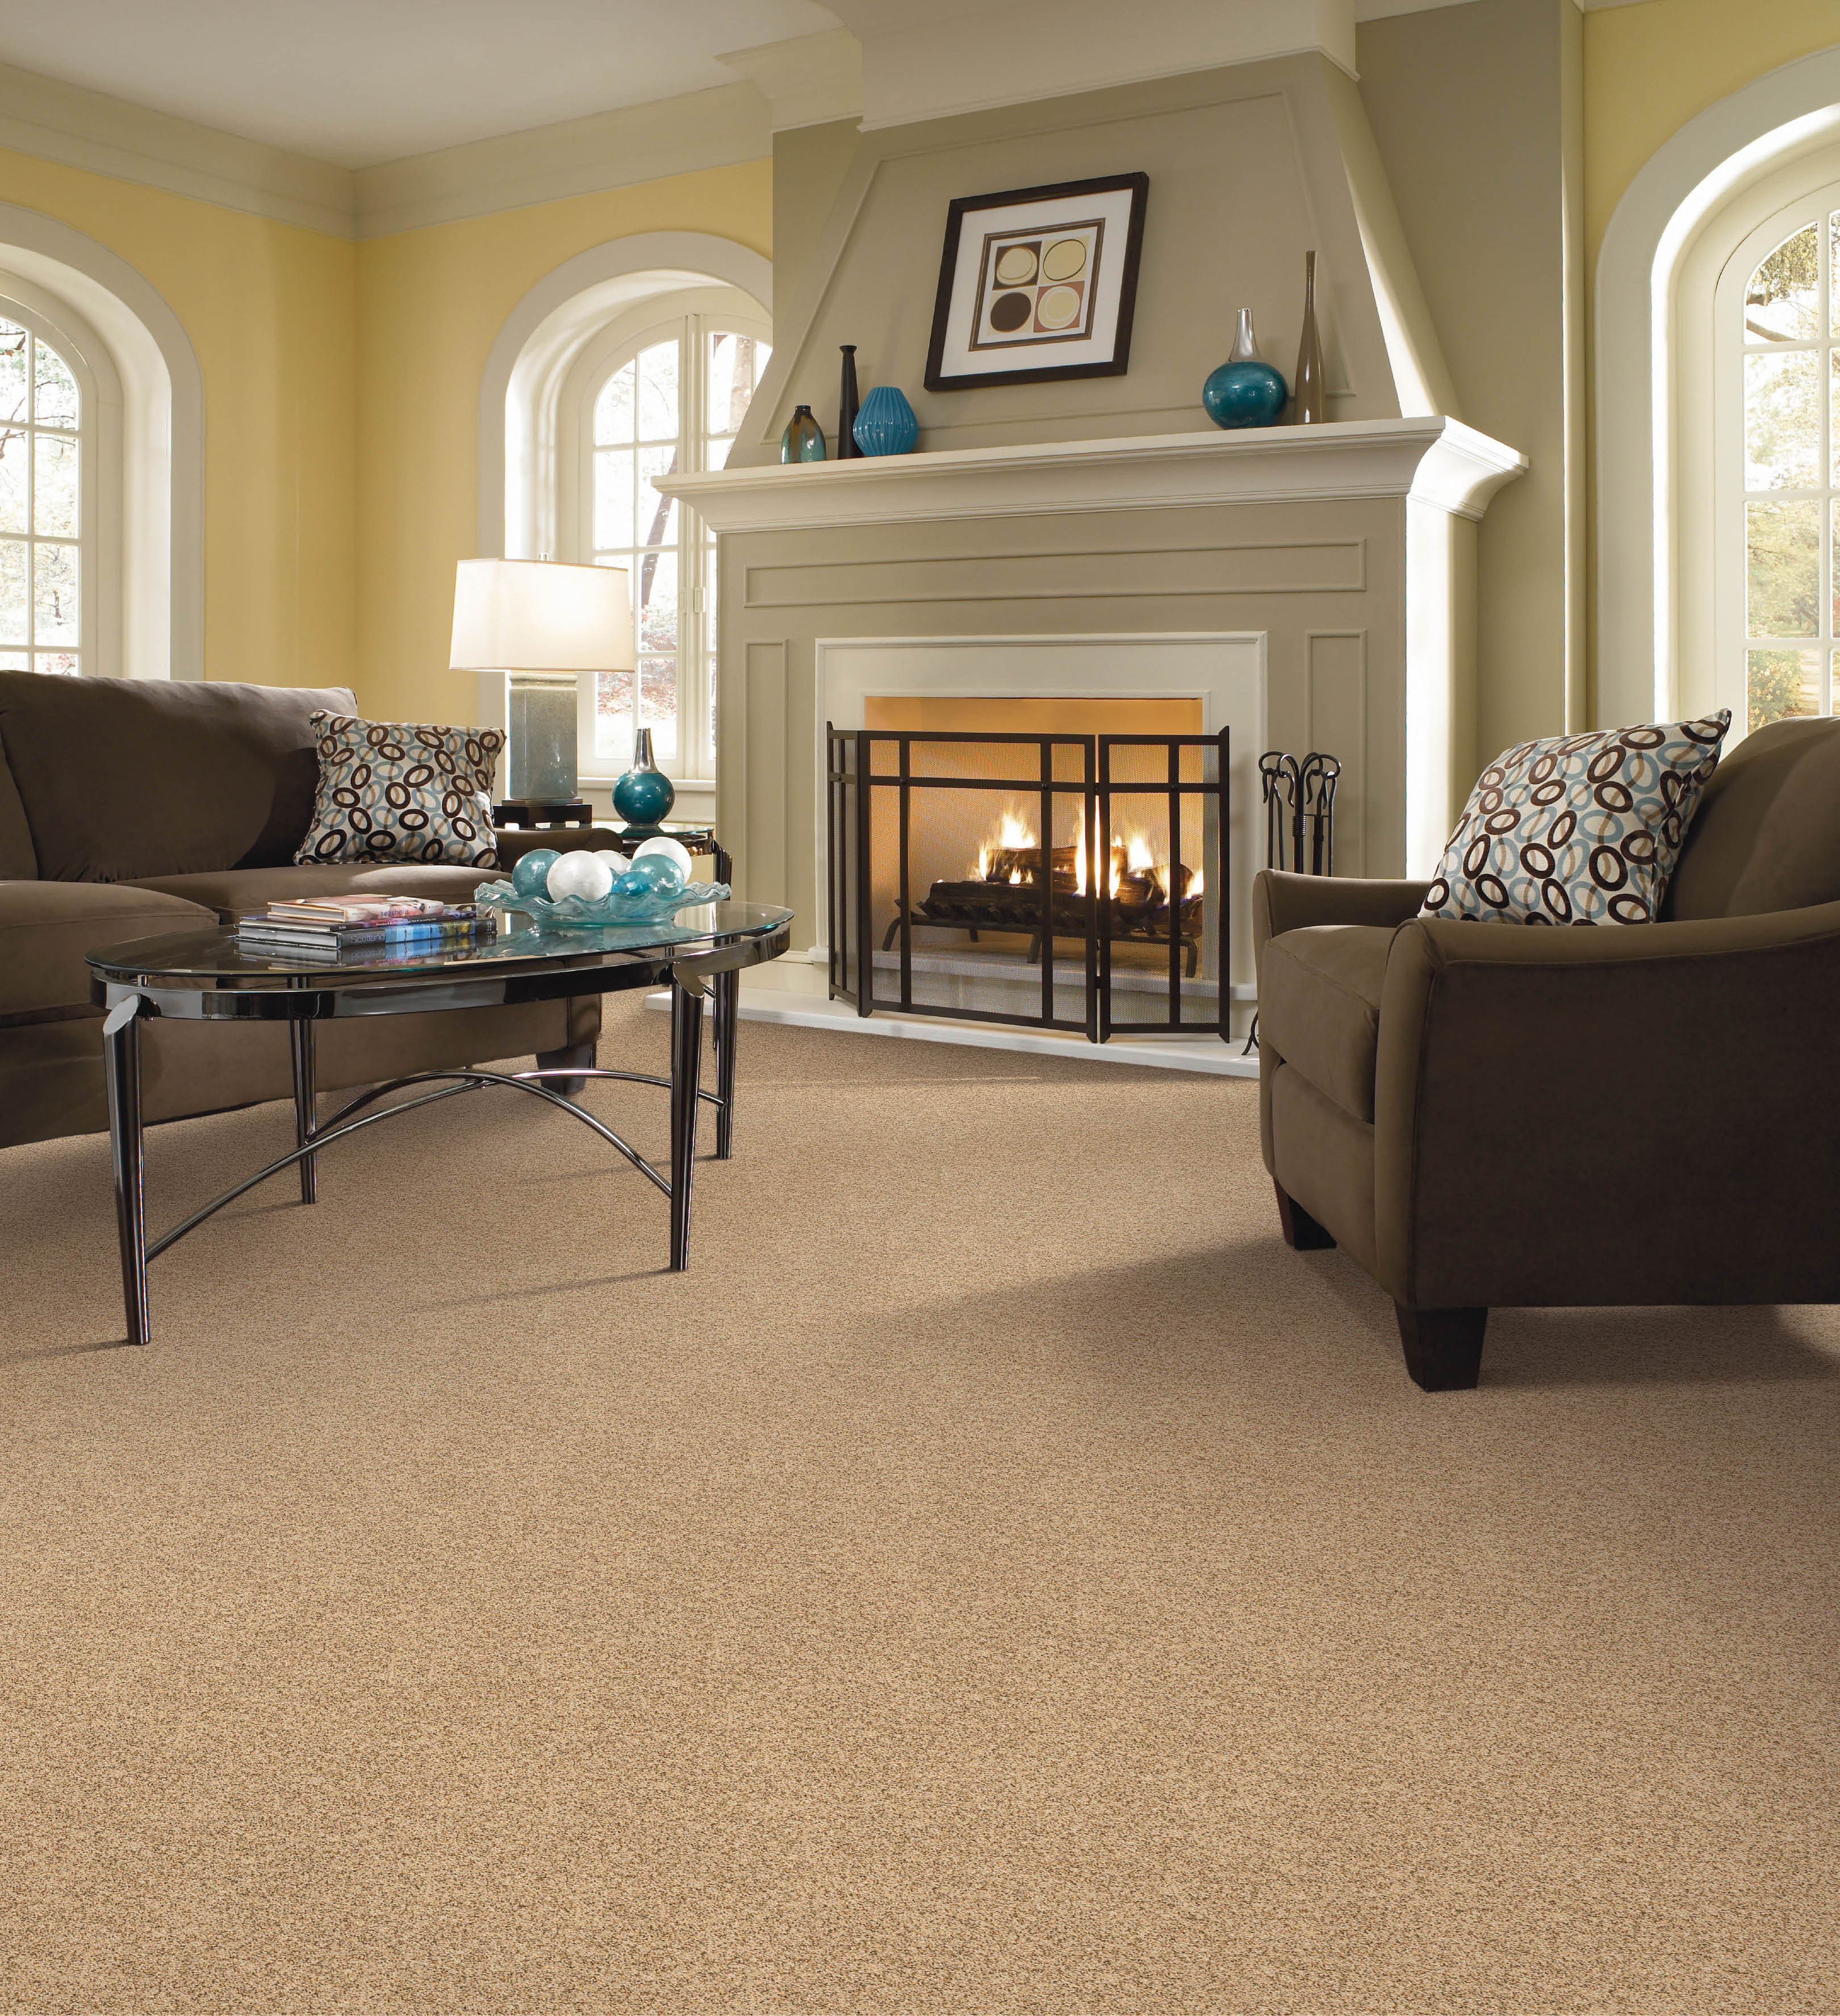 Carpet for Living Room Ideas Smart Carpet Berks Local Coupons November 2019